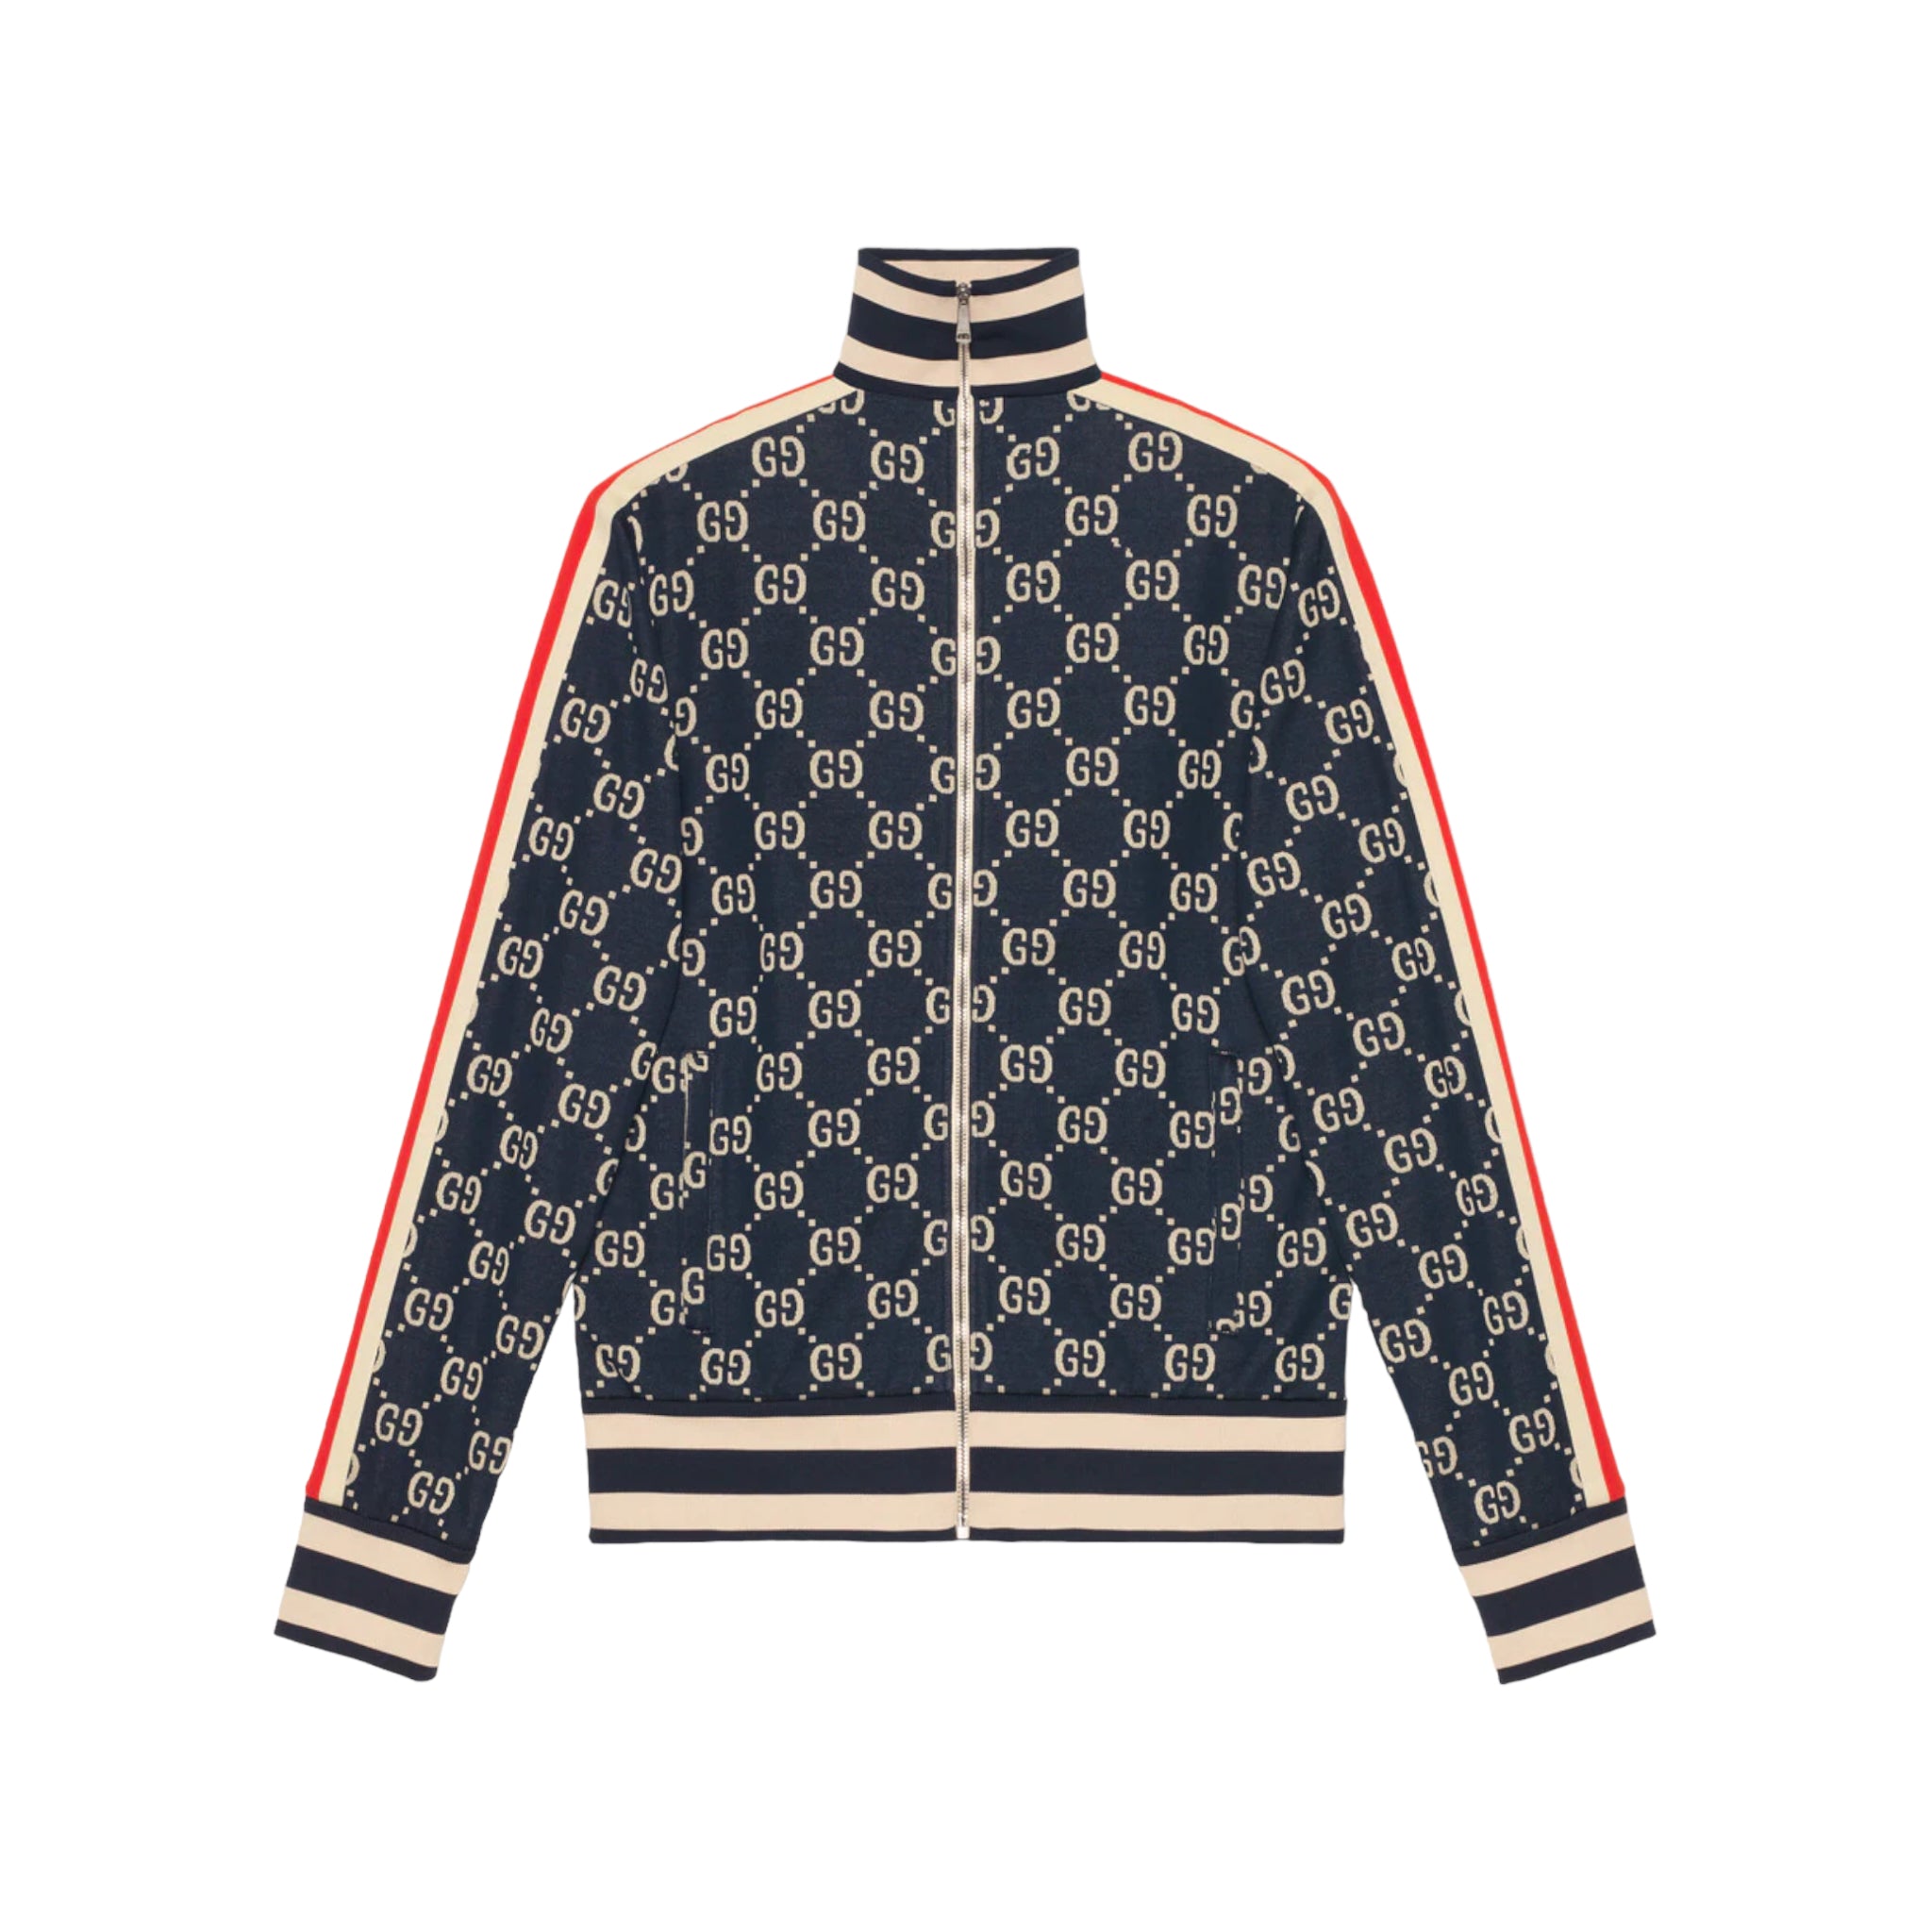 Gucci Jacquard Cotton Jacket